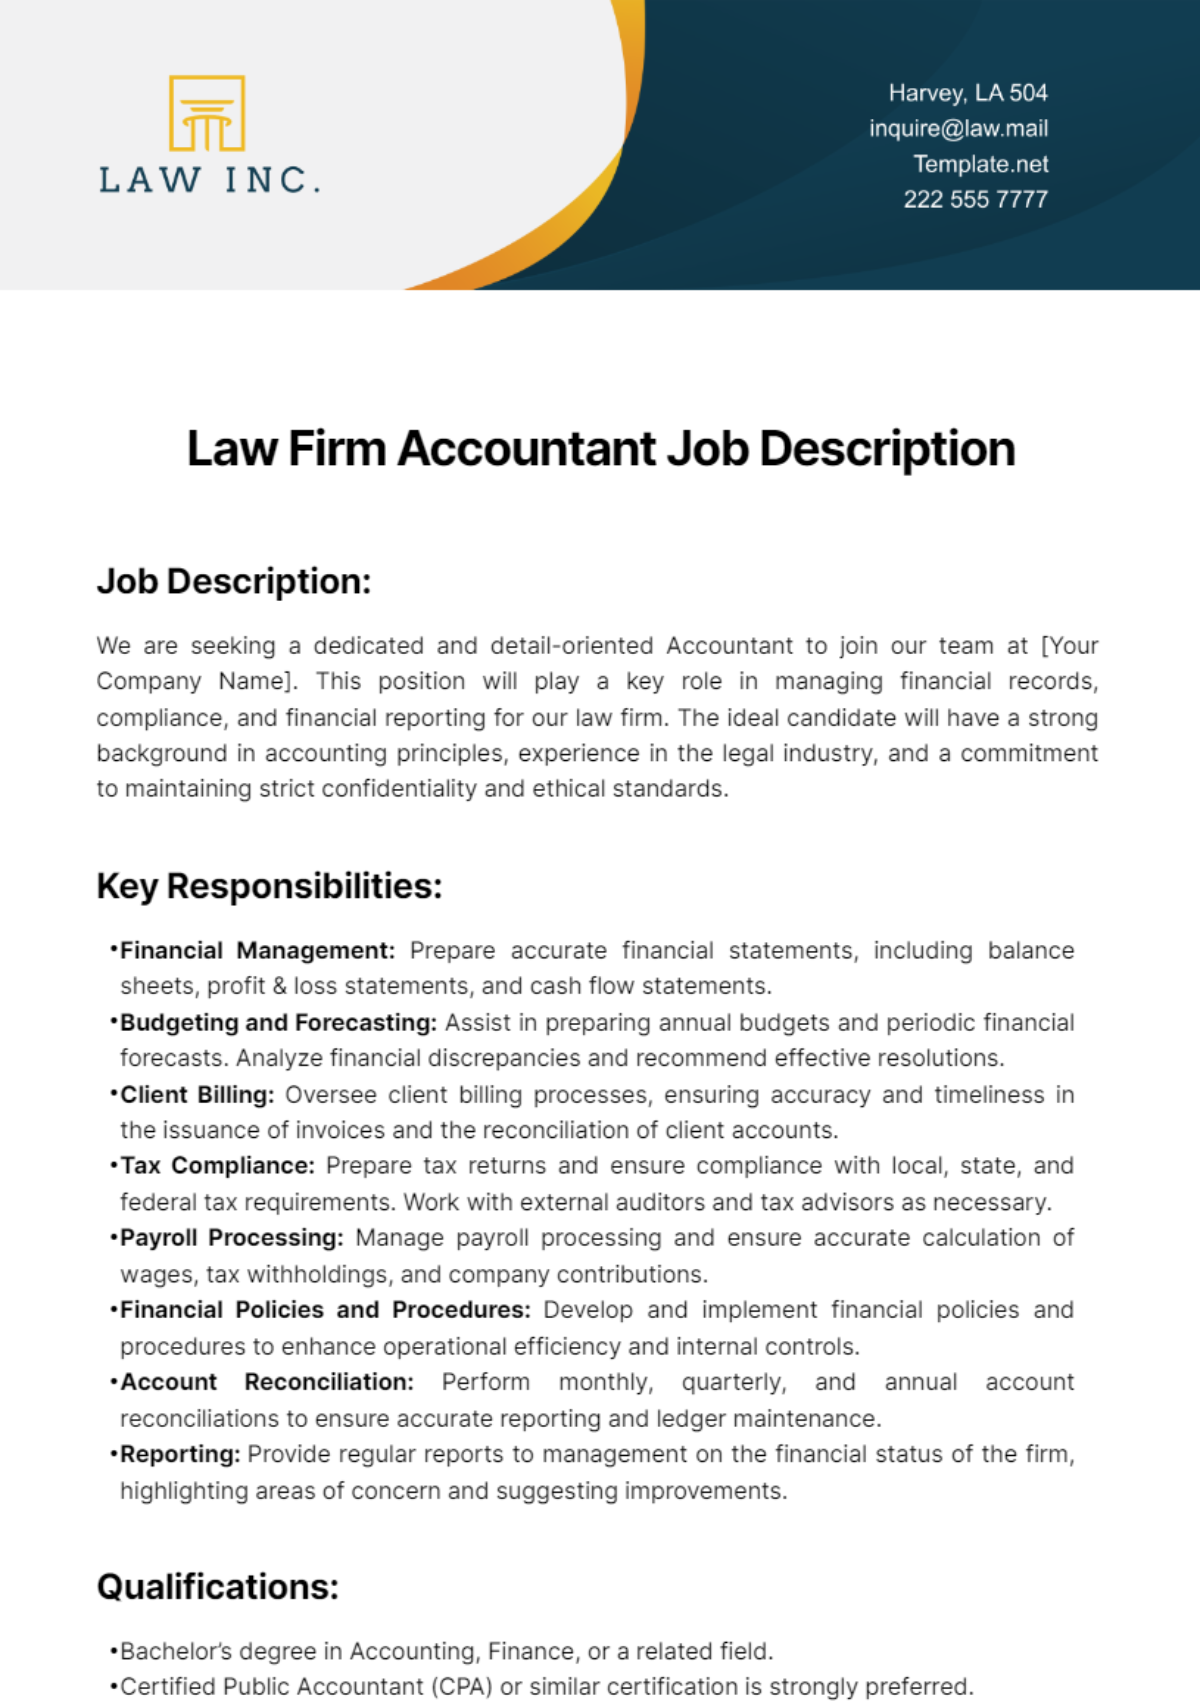 Law Firm Accountant Job Description Template